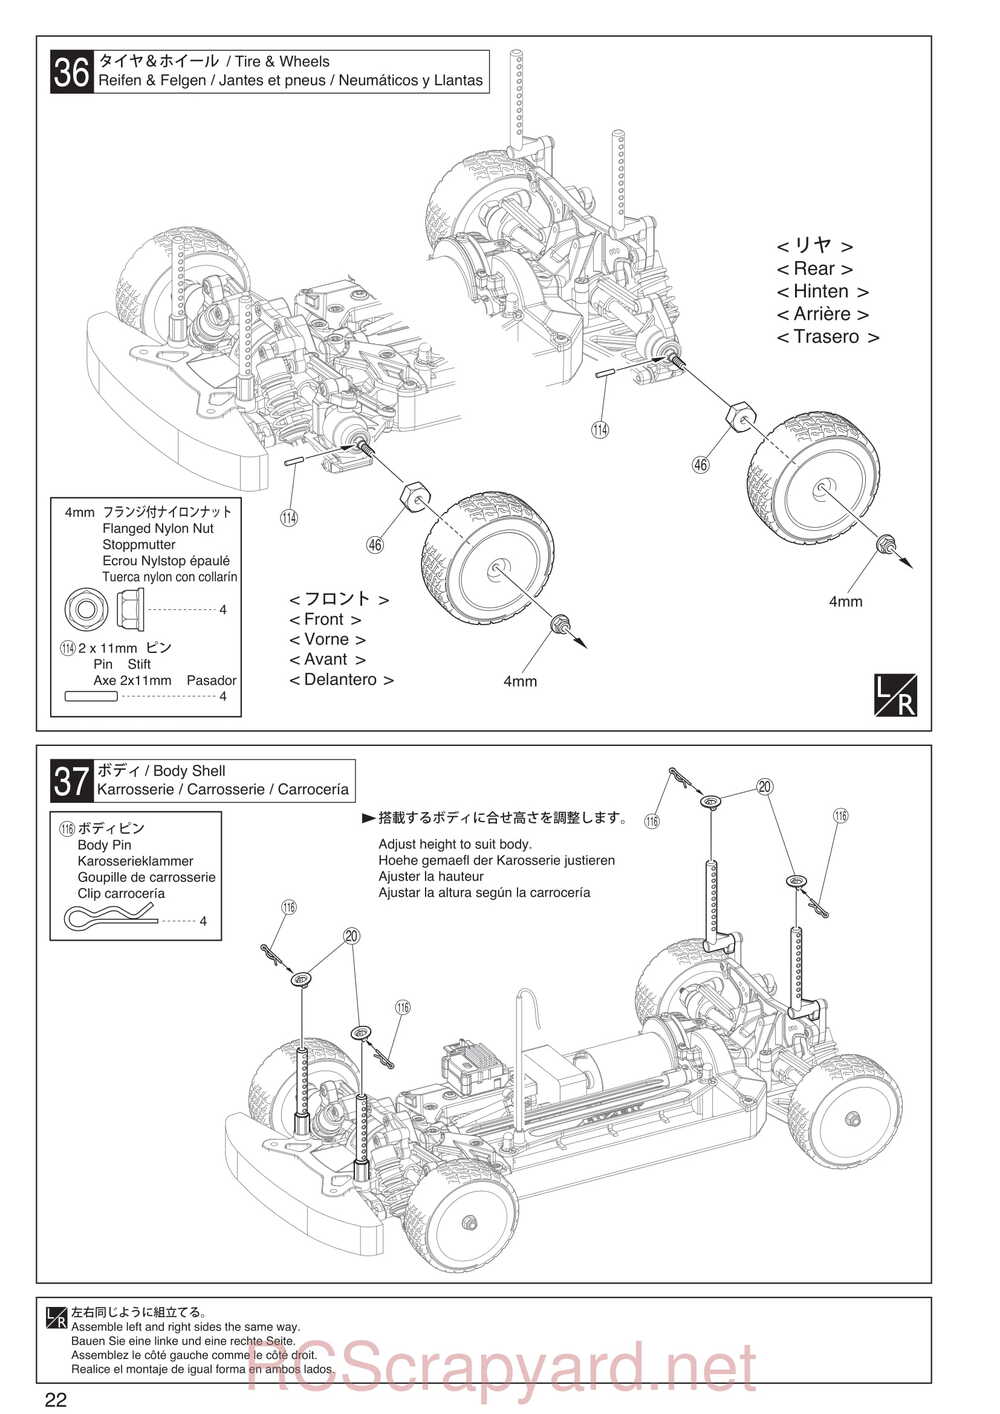 Kyosho - 30912 - EP Fazer Rally - Manual - Page 22